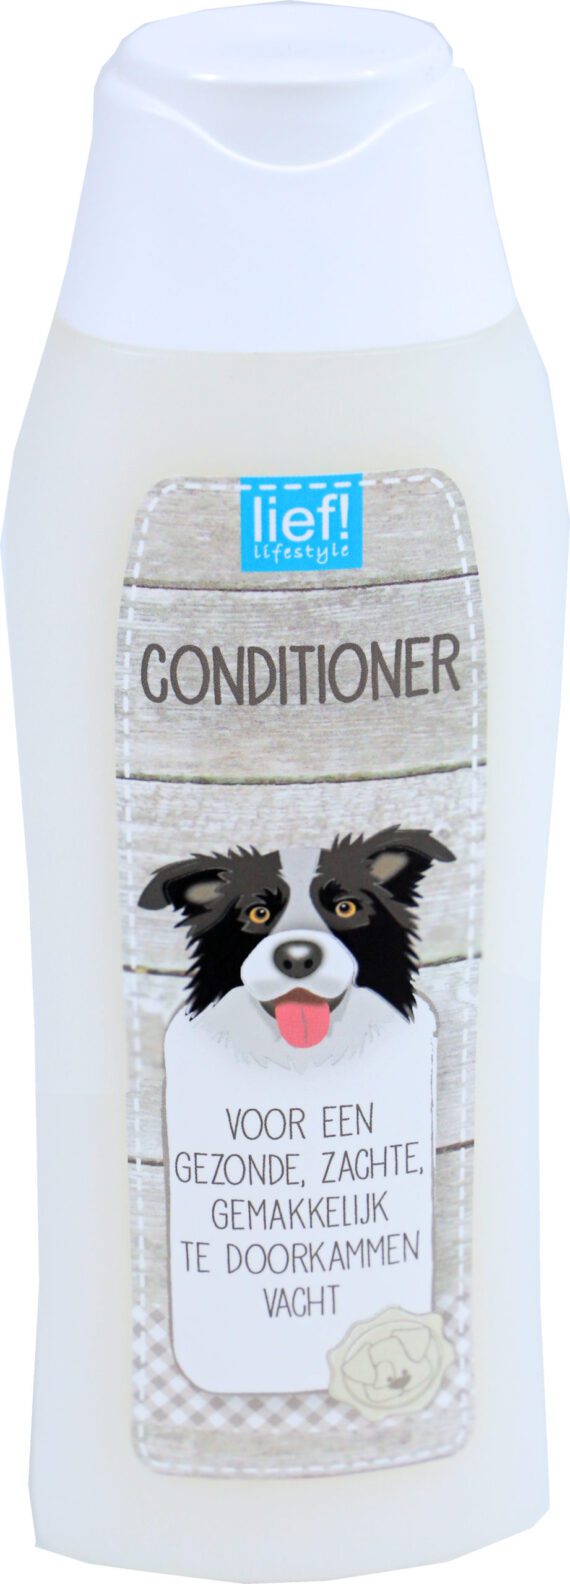 Lief! Vachtverzorging Shampoo Conditioner 300ml